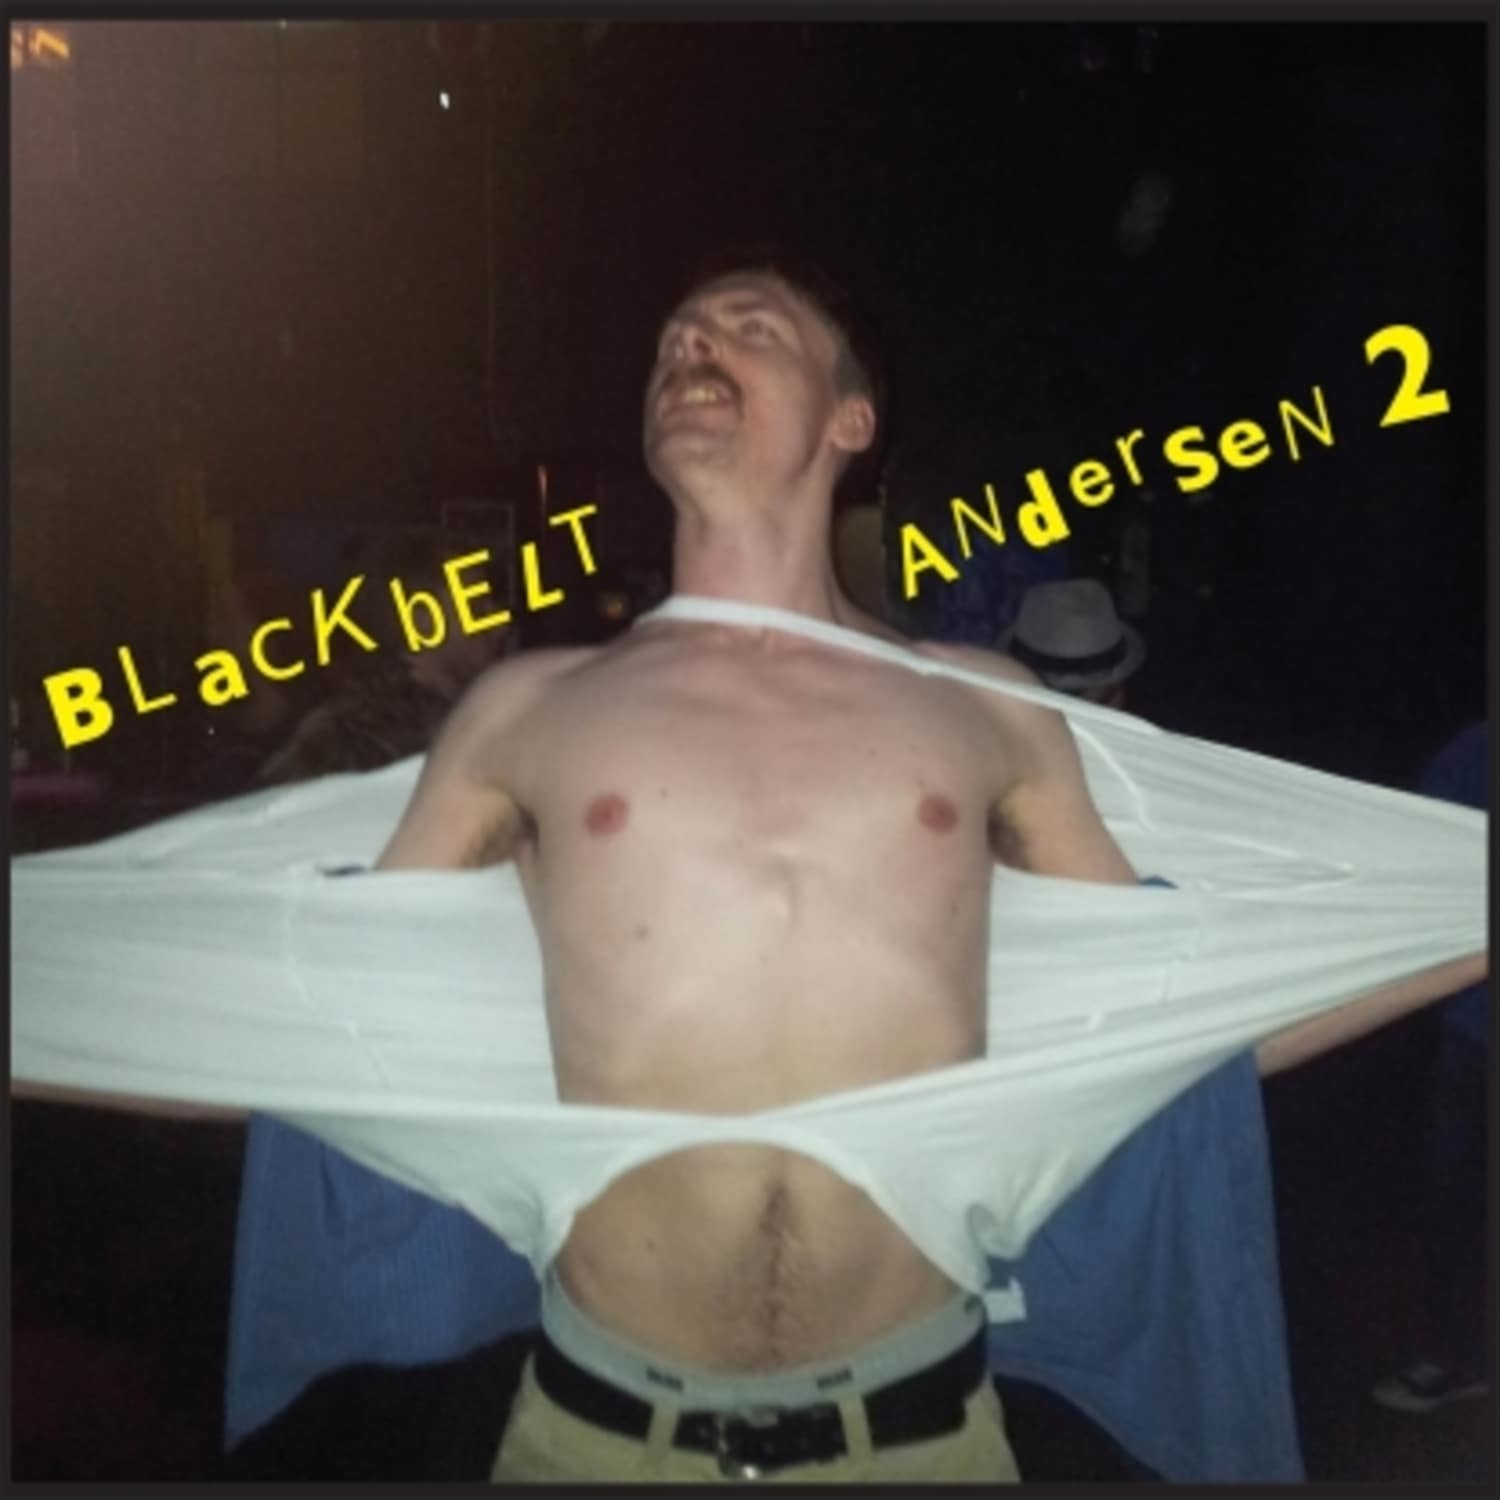 Blackbelt Andersen - BLACKBELT ANDERSEN 2 